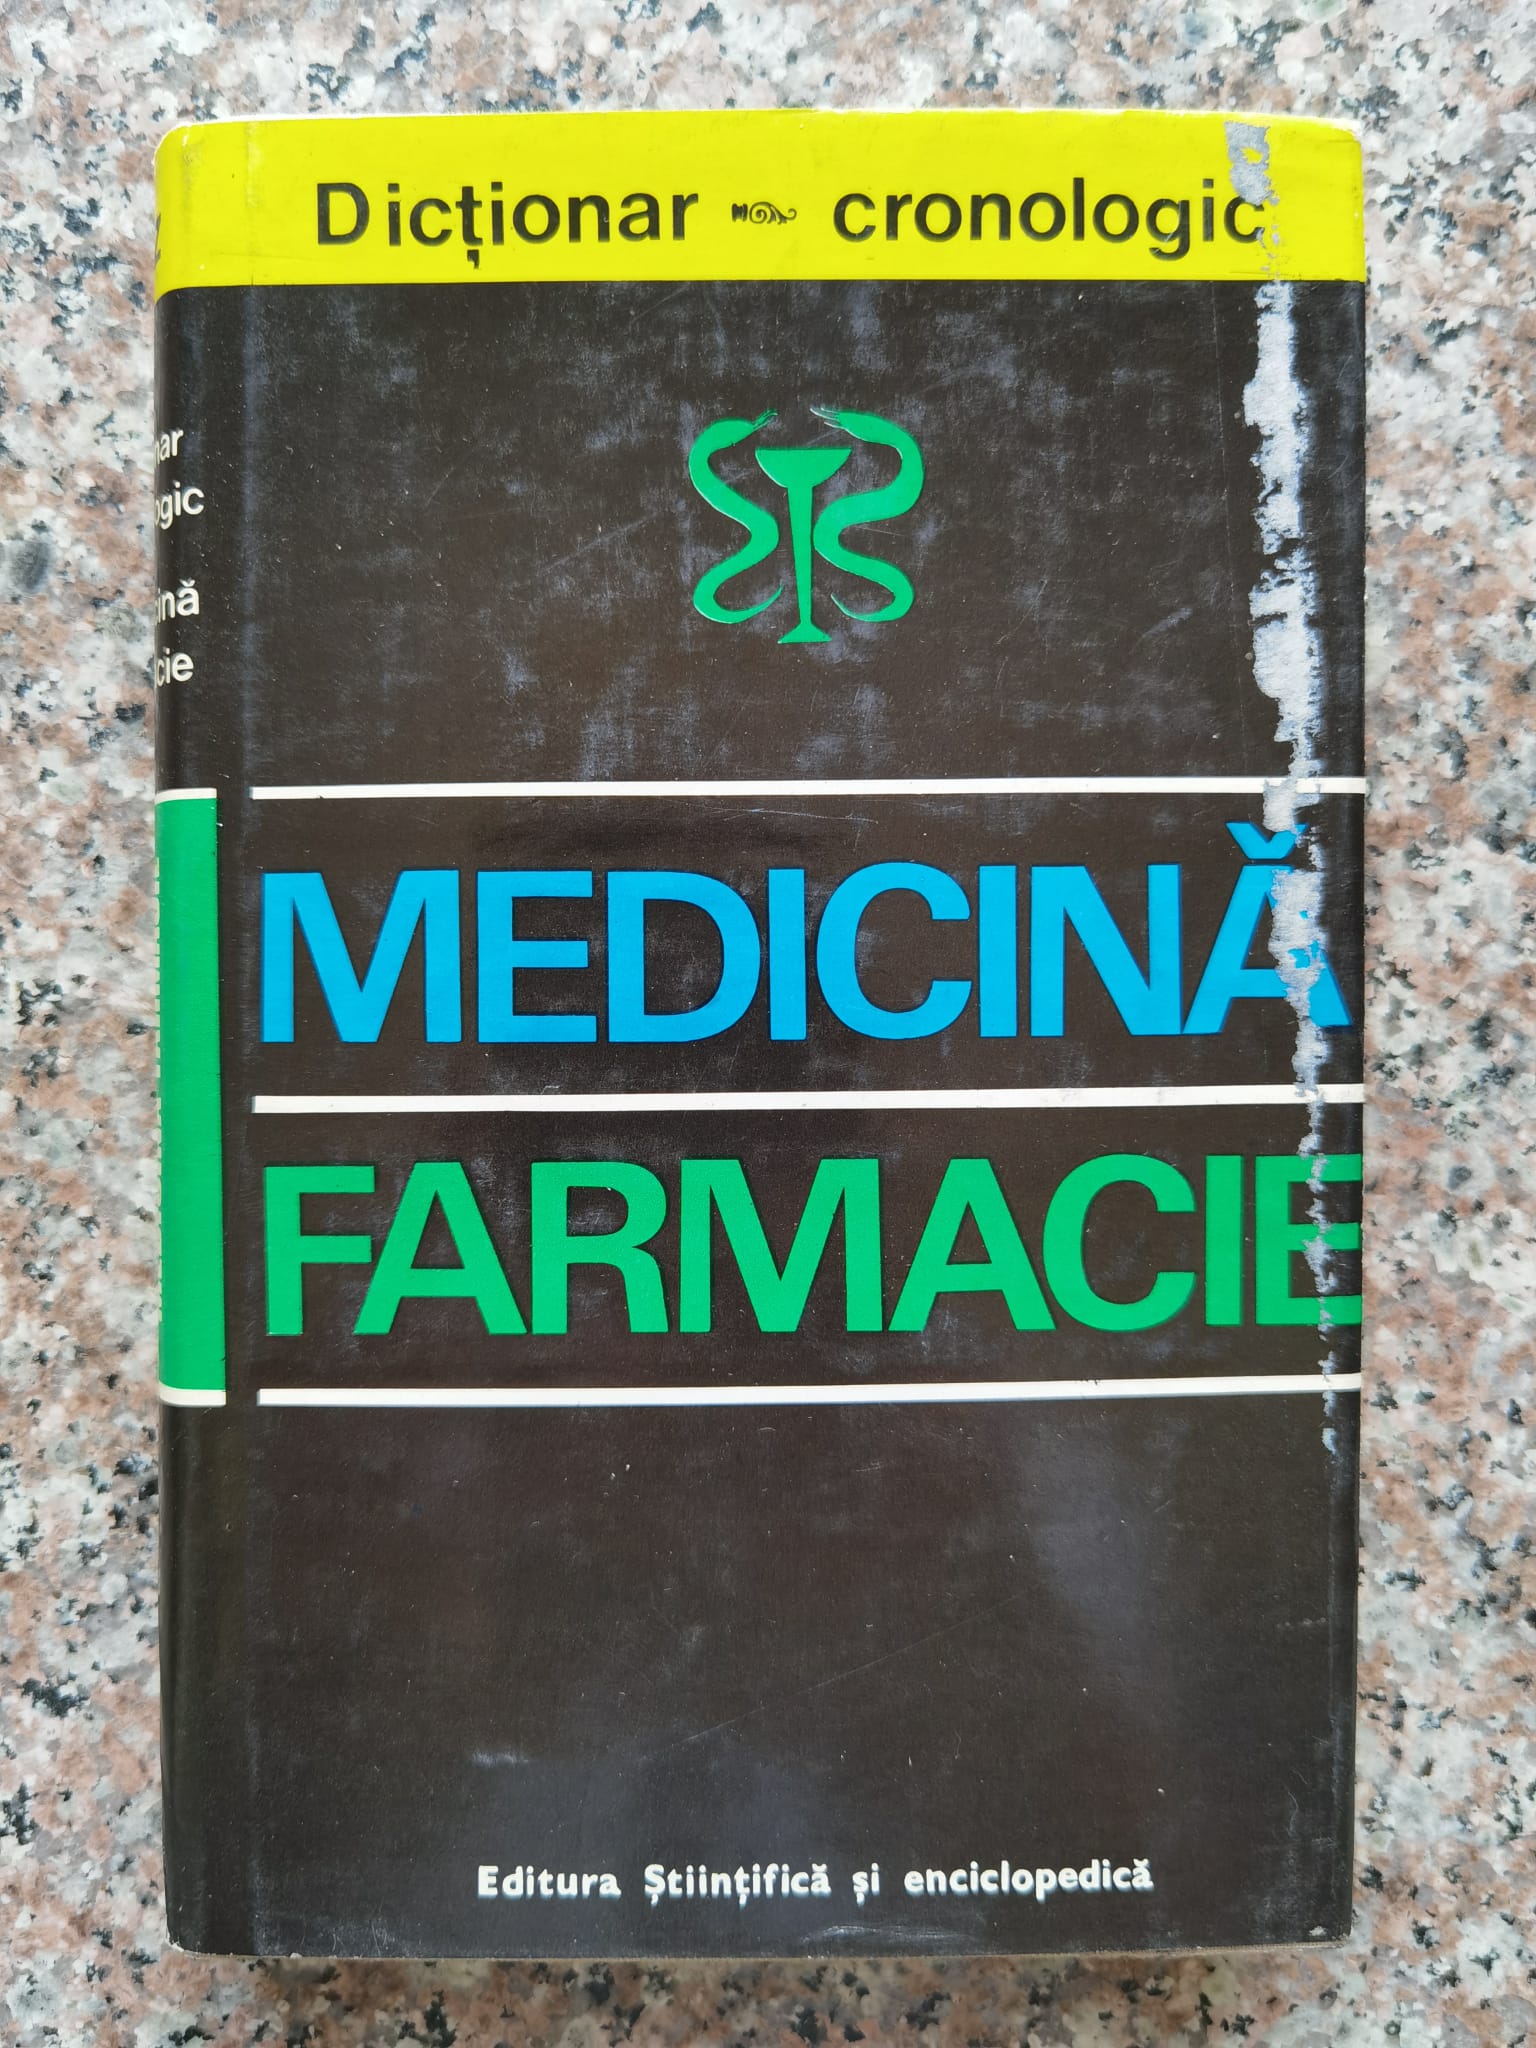 medicina farmacie dictionar cronologic                                                               g. bratescu                                                                                         